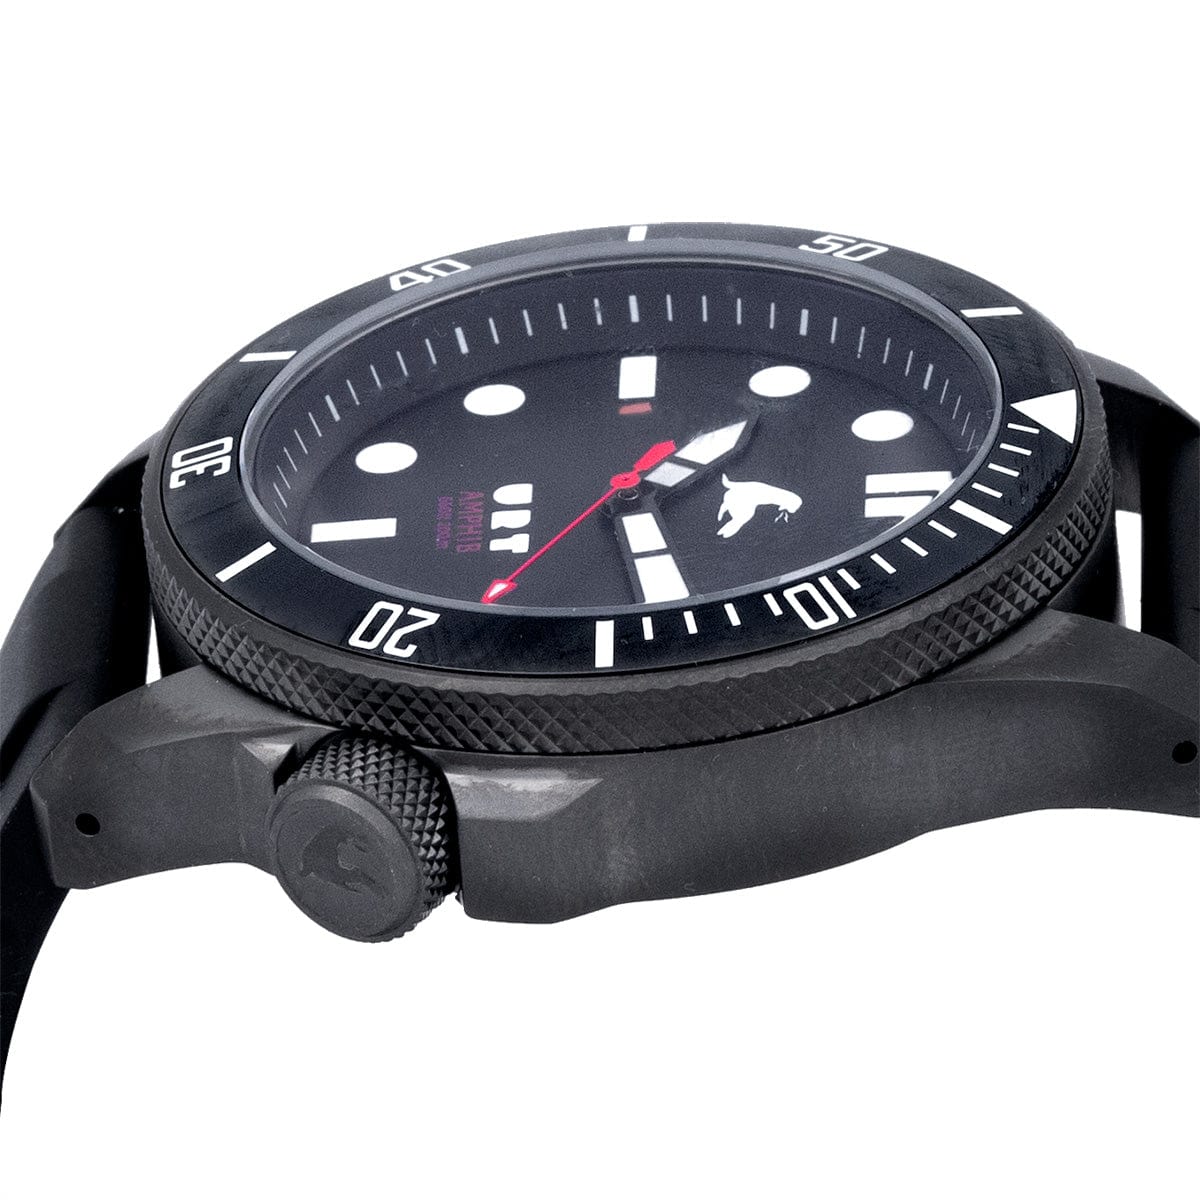 The Amphib Dive Watch // PVD